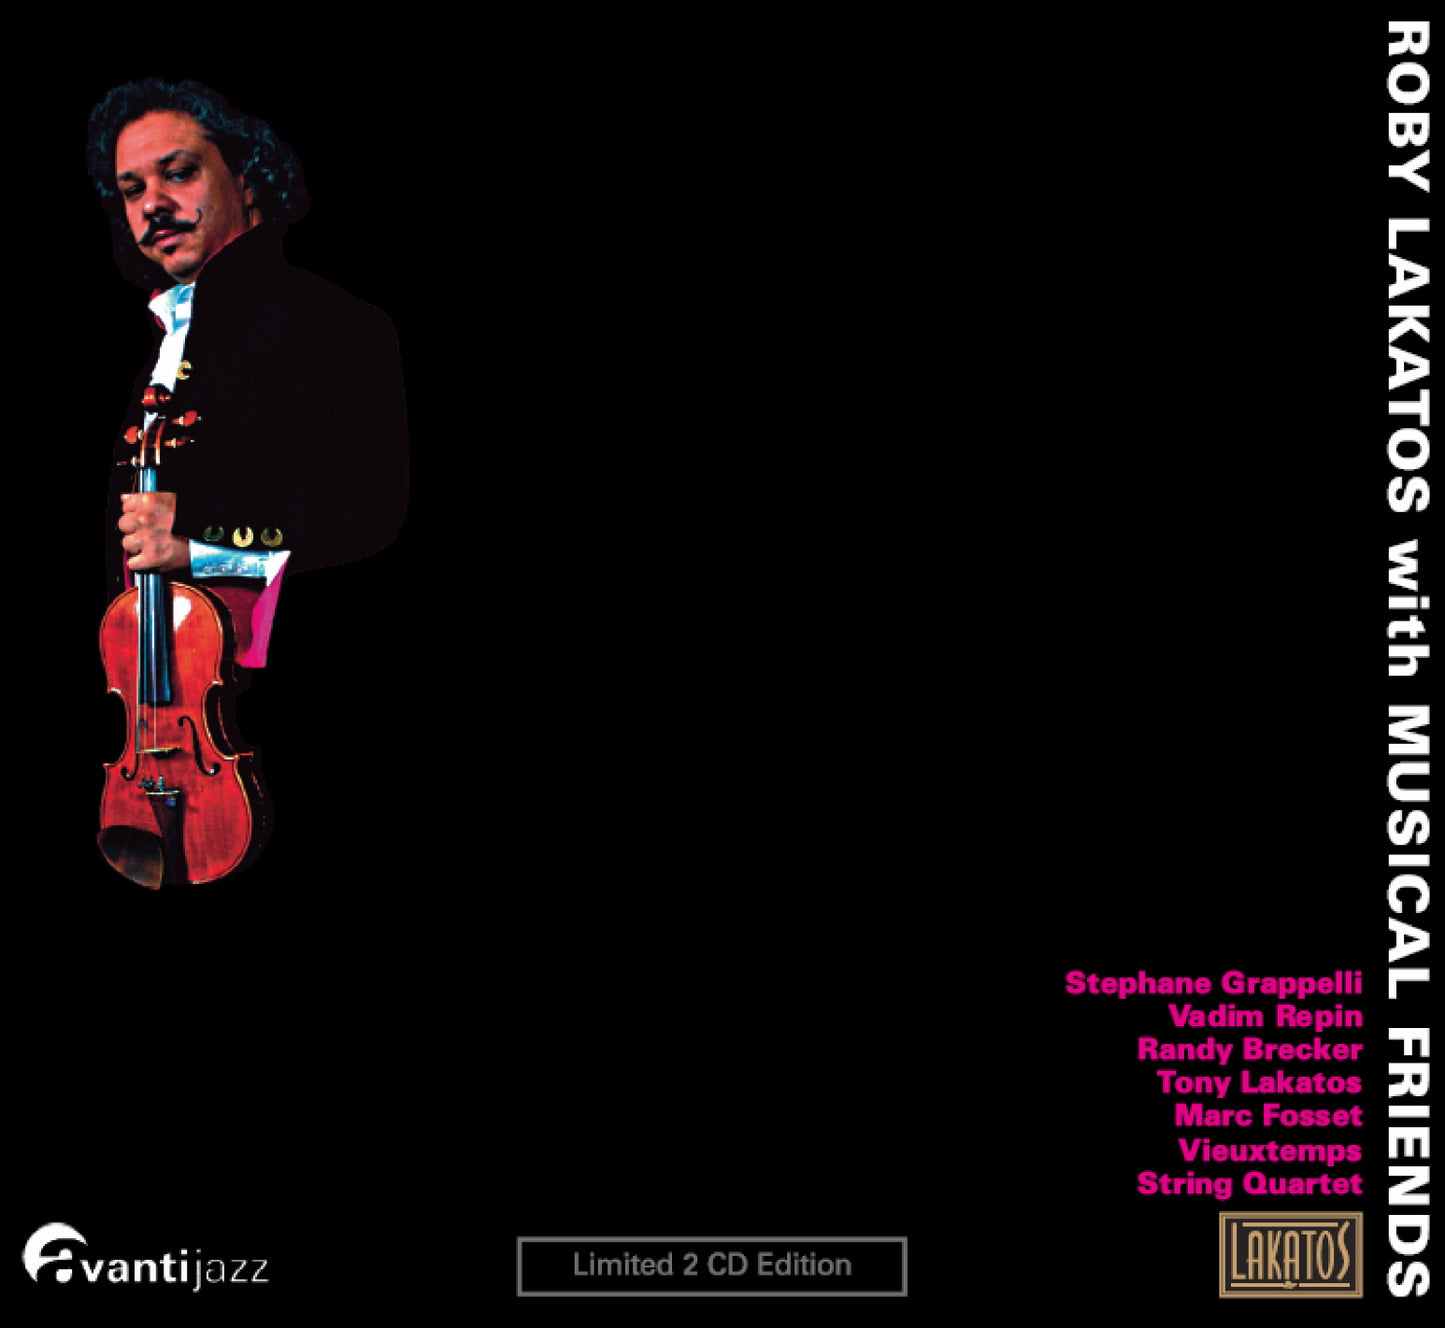 Roby Lakatos with Musical Friends – Roby Lakatos (1 CD + 1 Bonus CD)